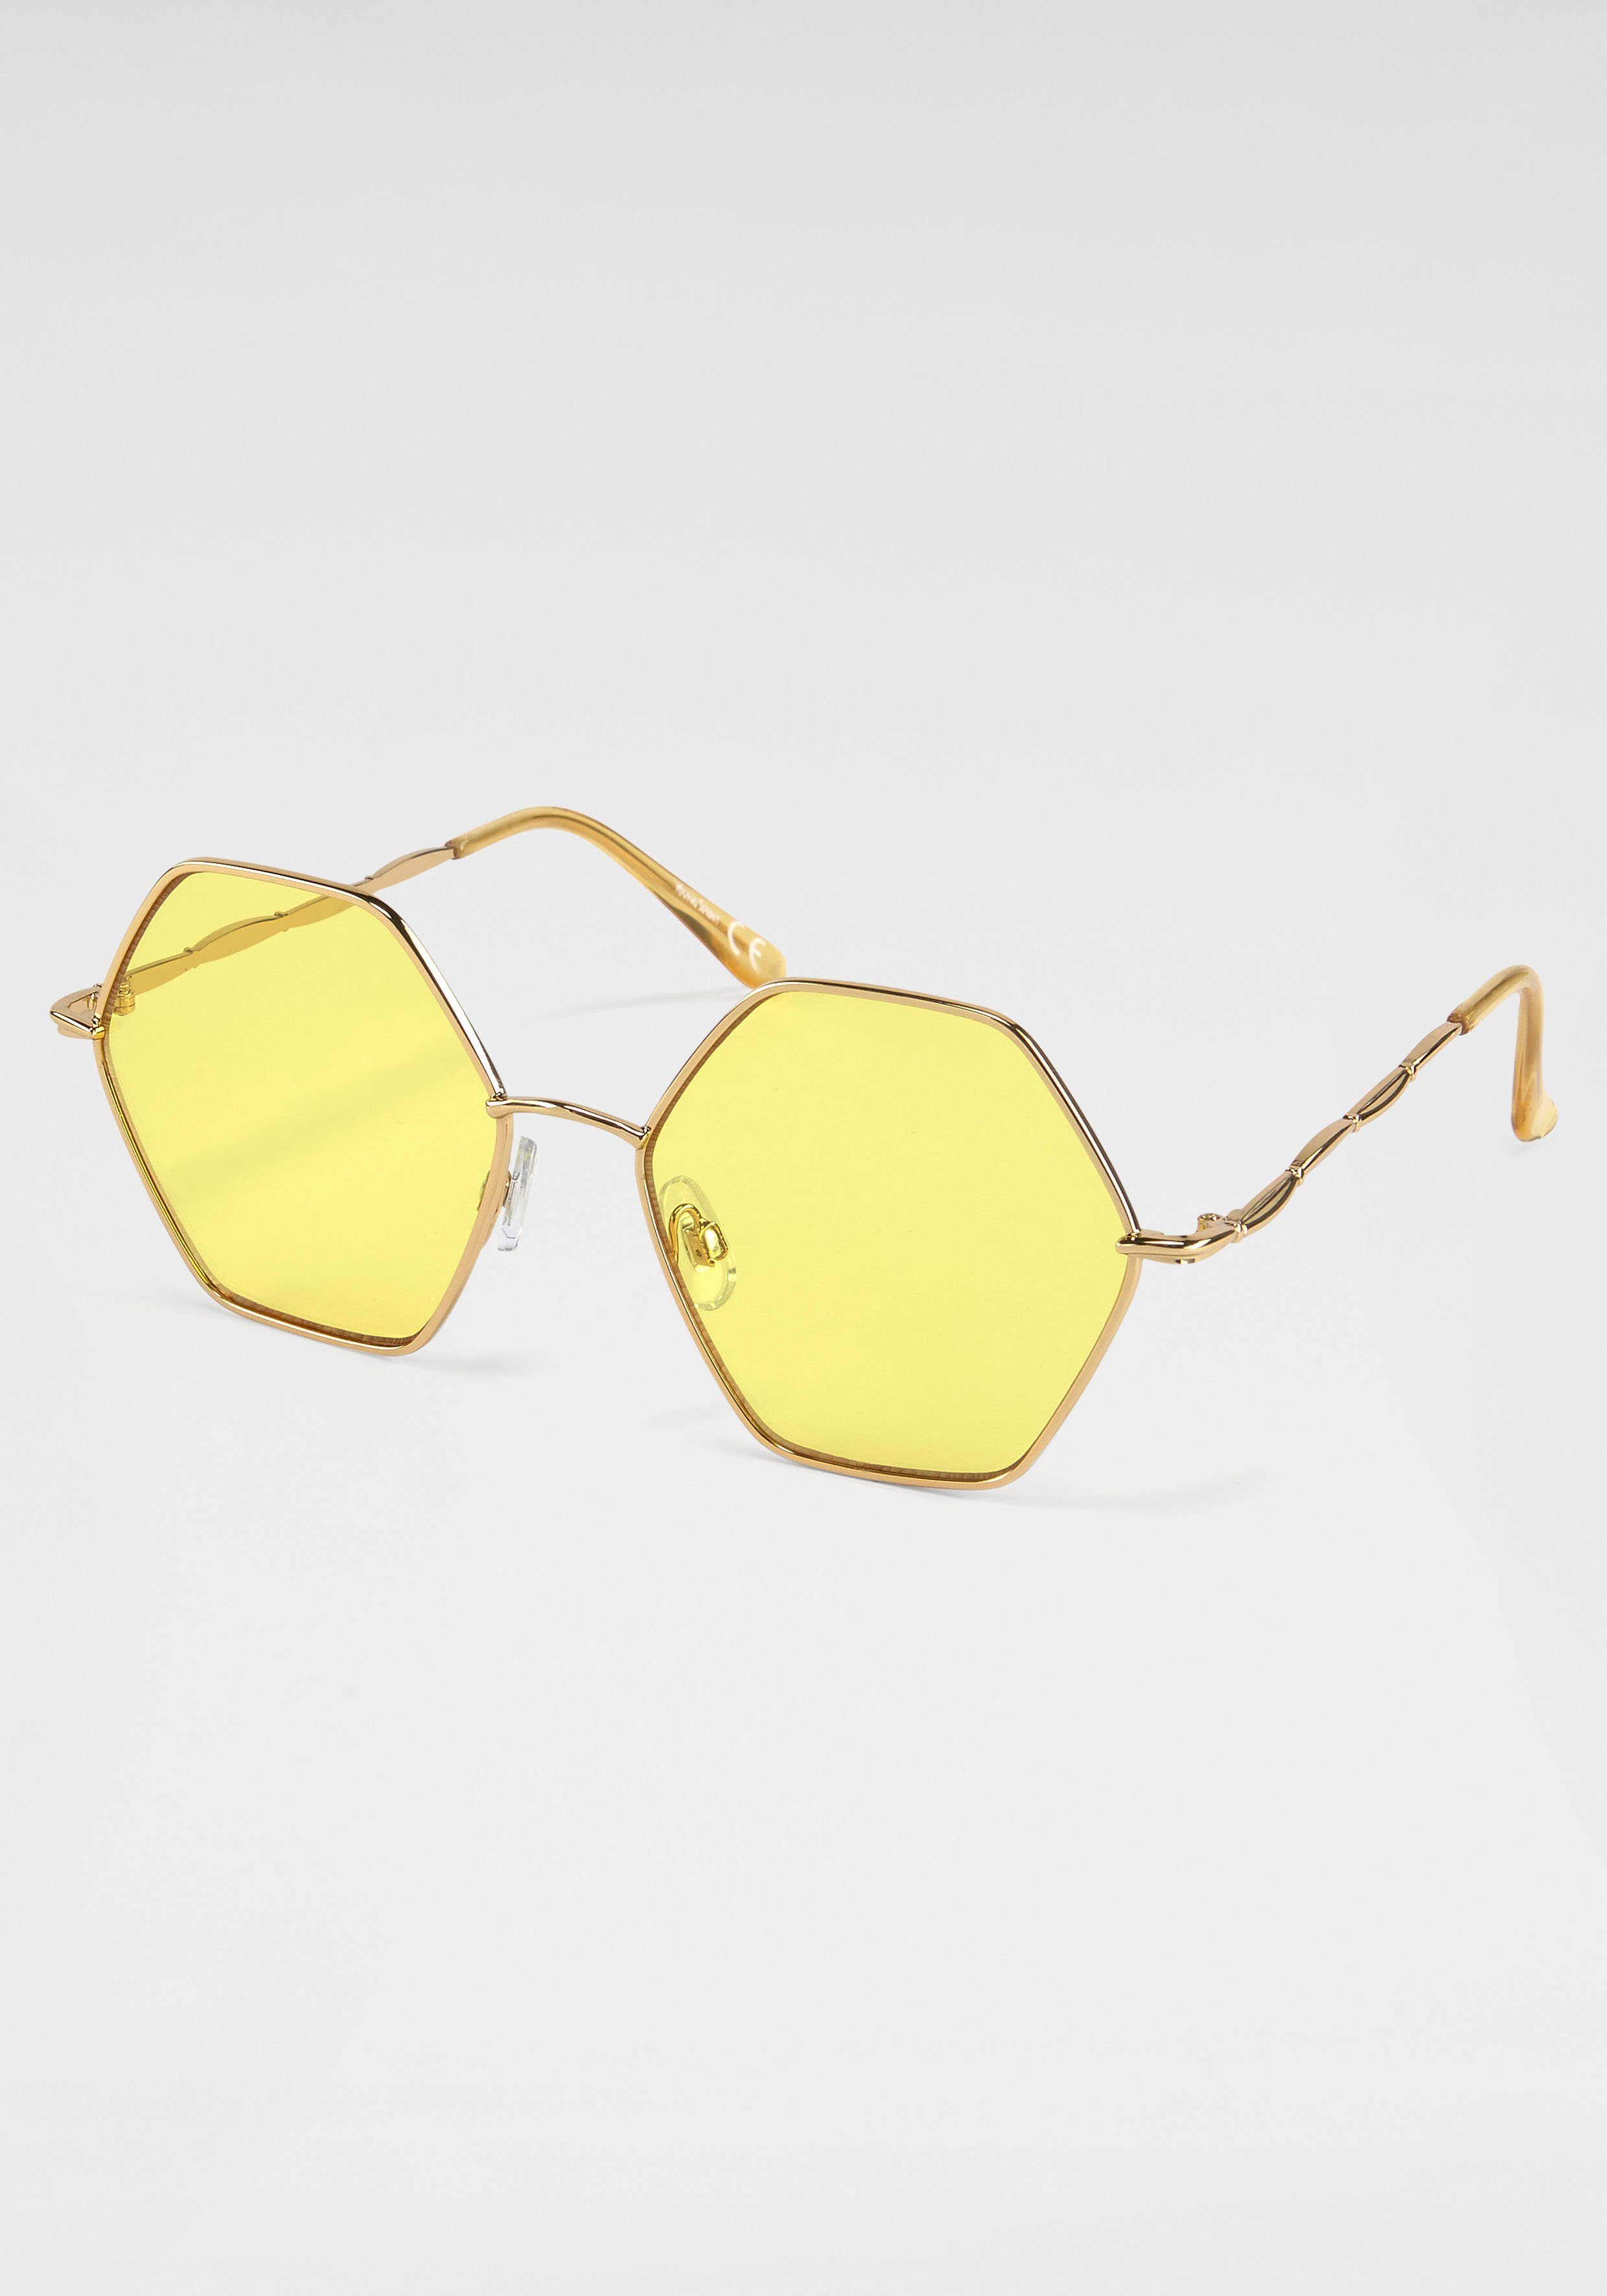 YOUNG SPIRIT LONDON Eyewear Sonnenbrille gelb